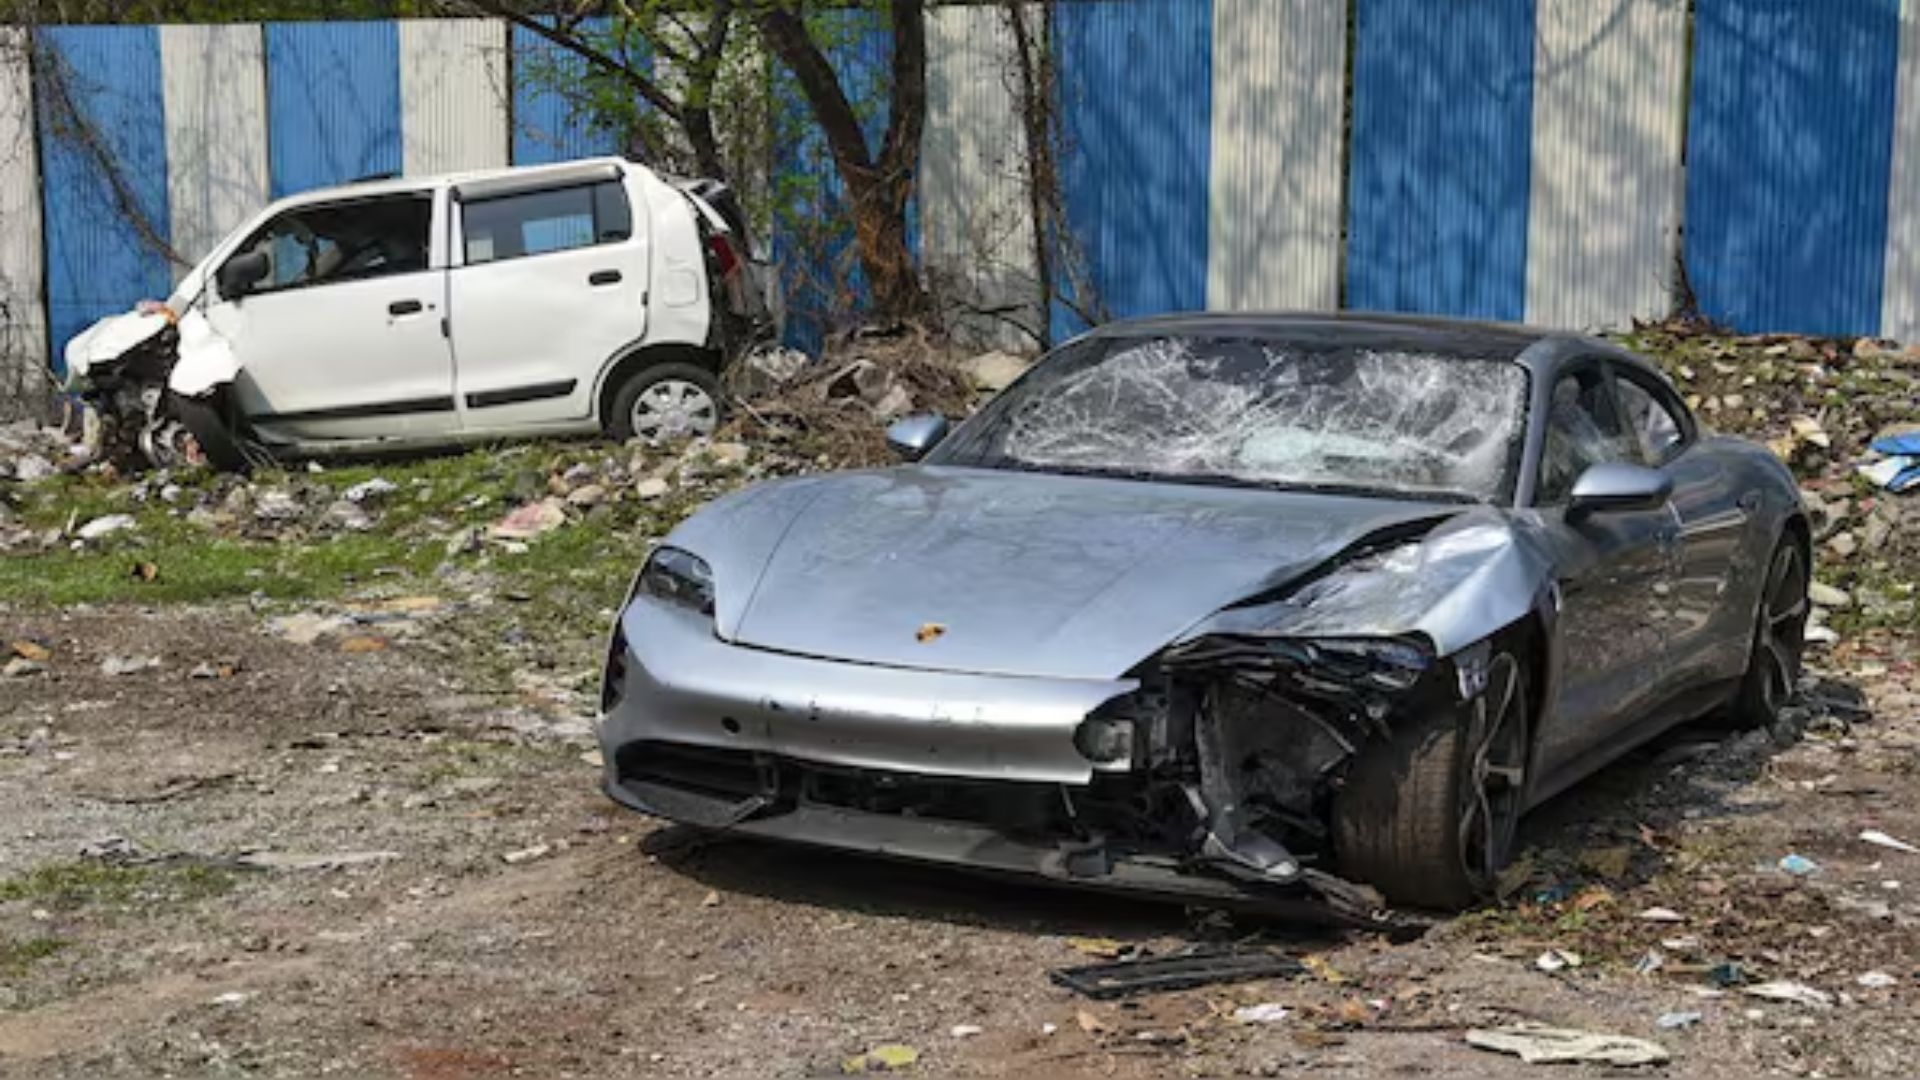 Pune Porsche Crash: Both Teen’s Father And Grandfather Sent To 14-Day Judicial Custody